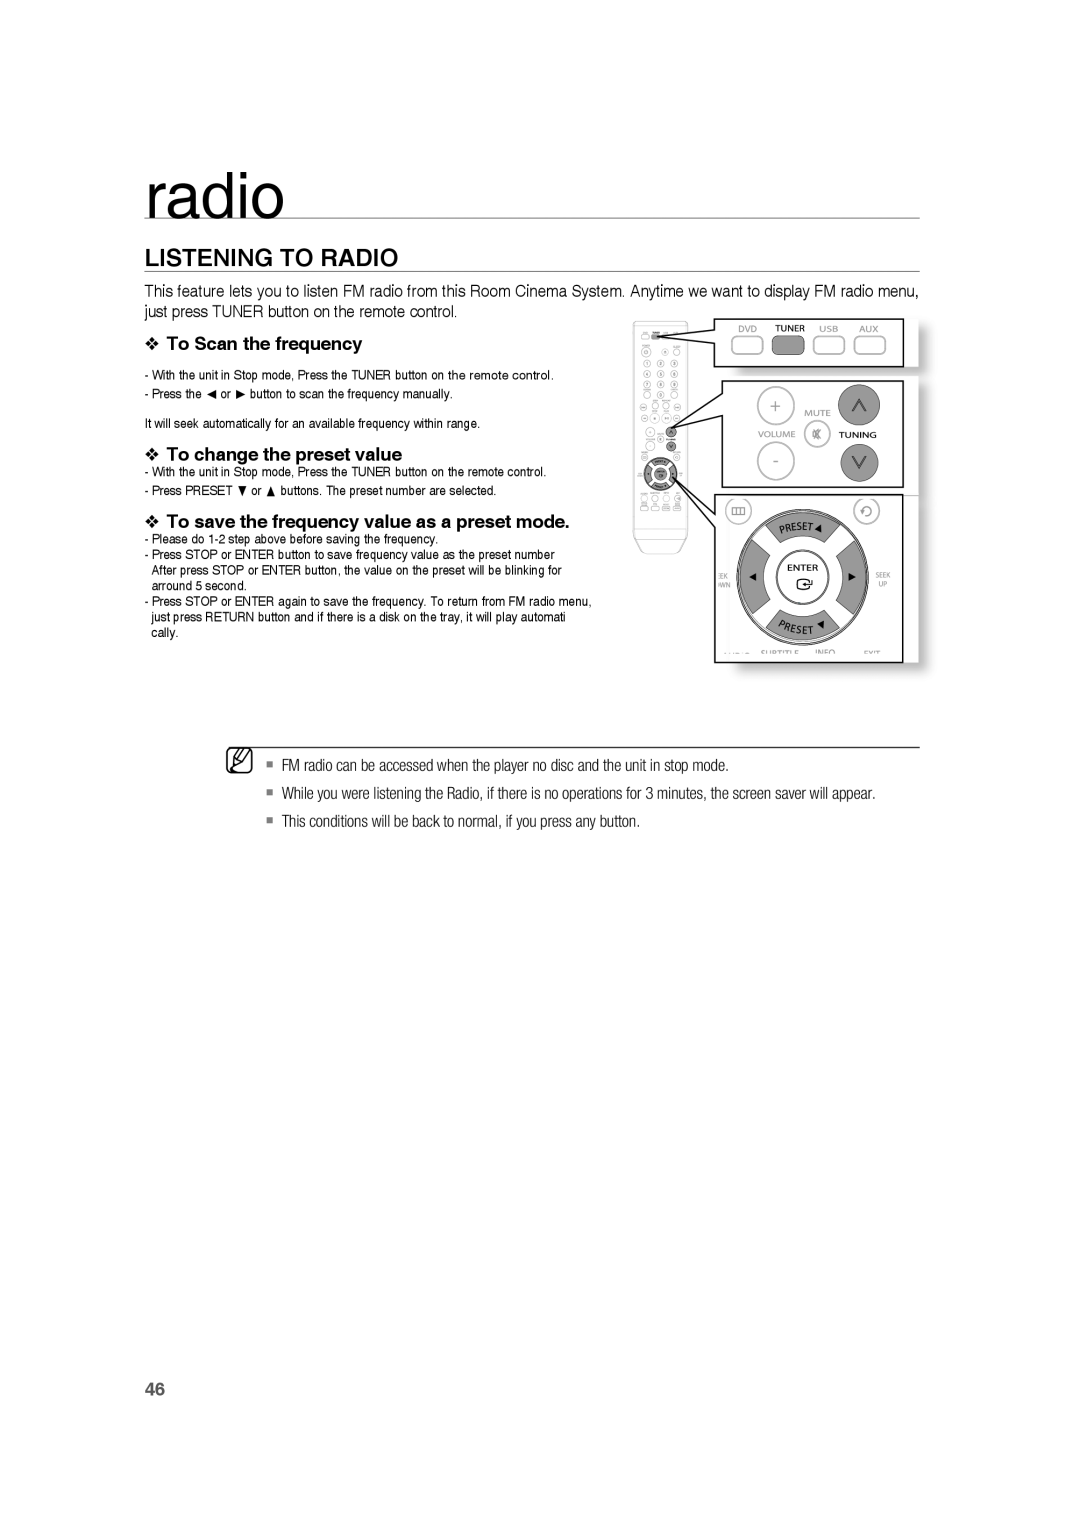 Samsung HE10T user manual radio, Listening To Radio 